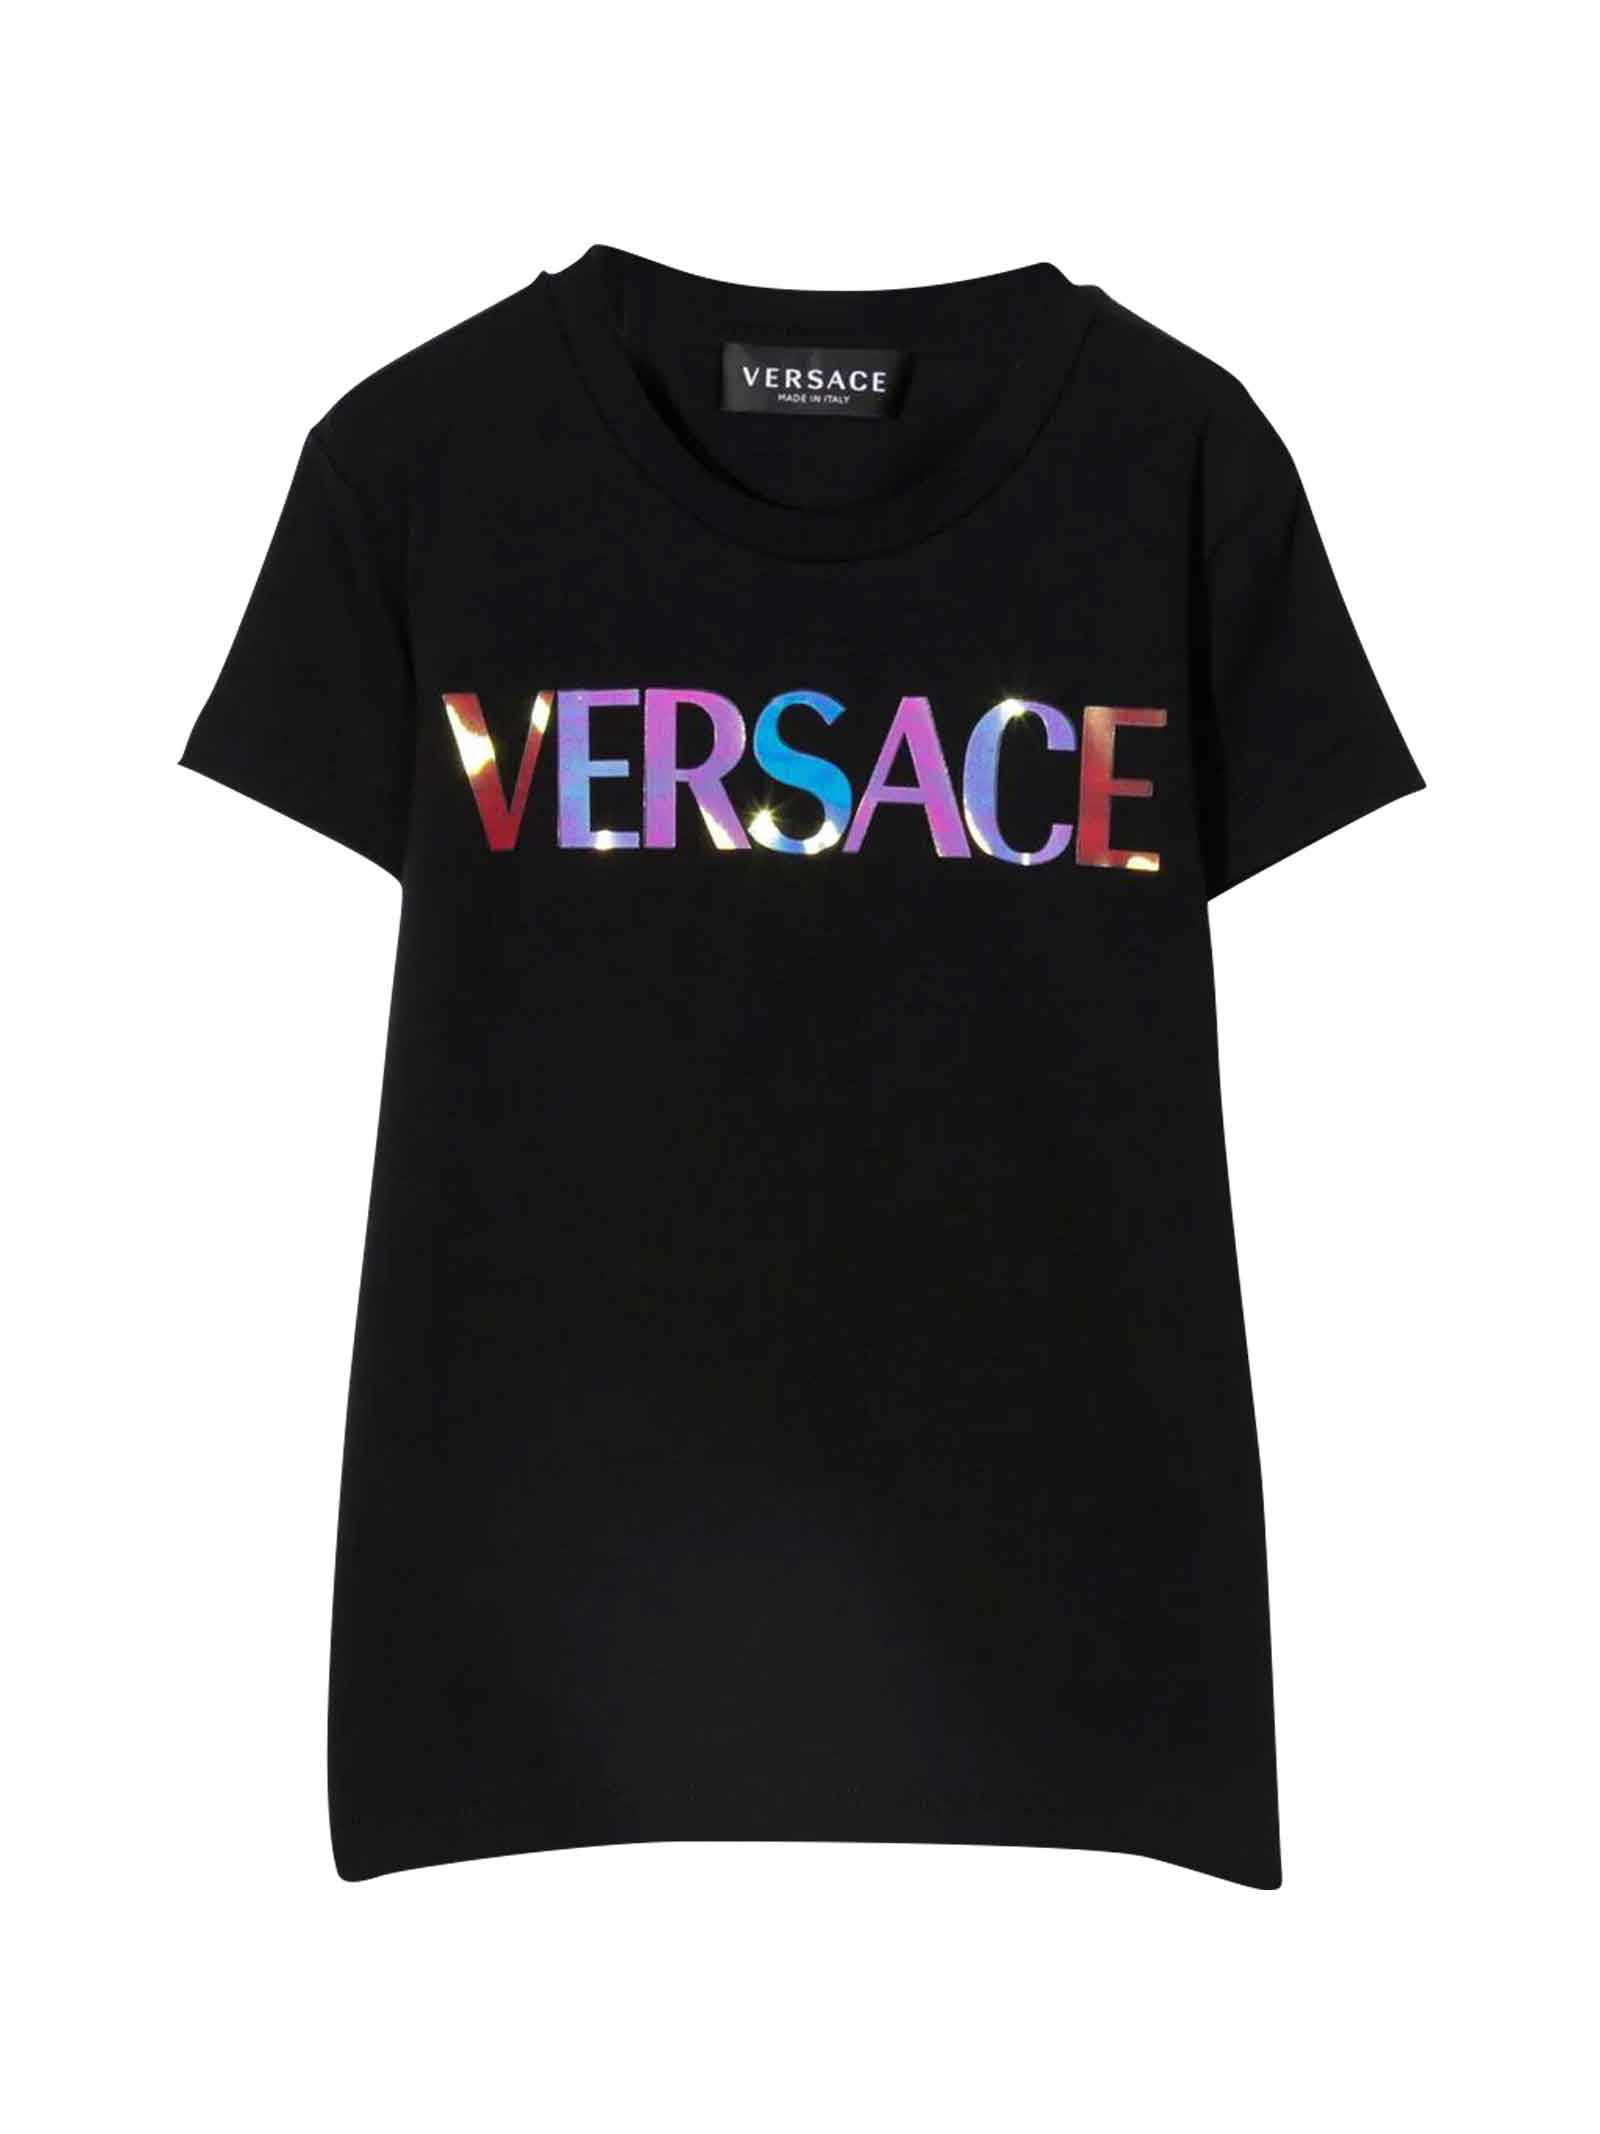 Versace Young Unisex Black T-shirt